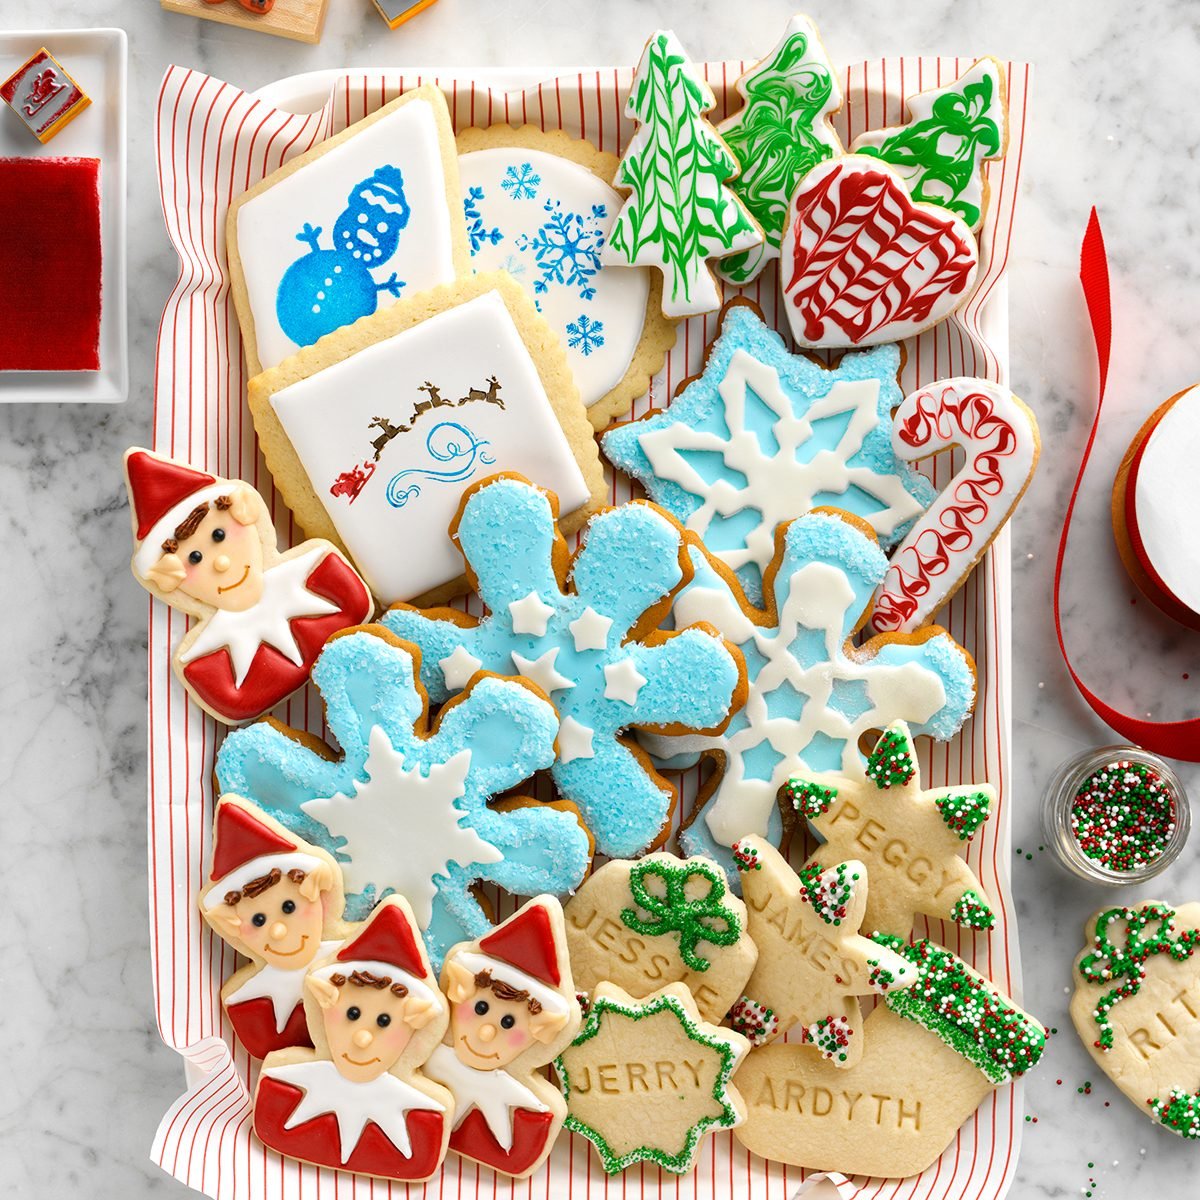 Best Coloring Christmas Cookies - Favorite Christmas Food Gel Colors For Royal Icing Sweetopia